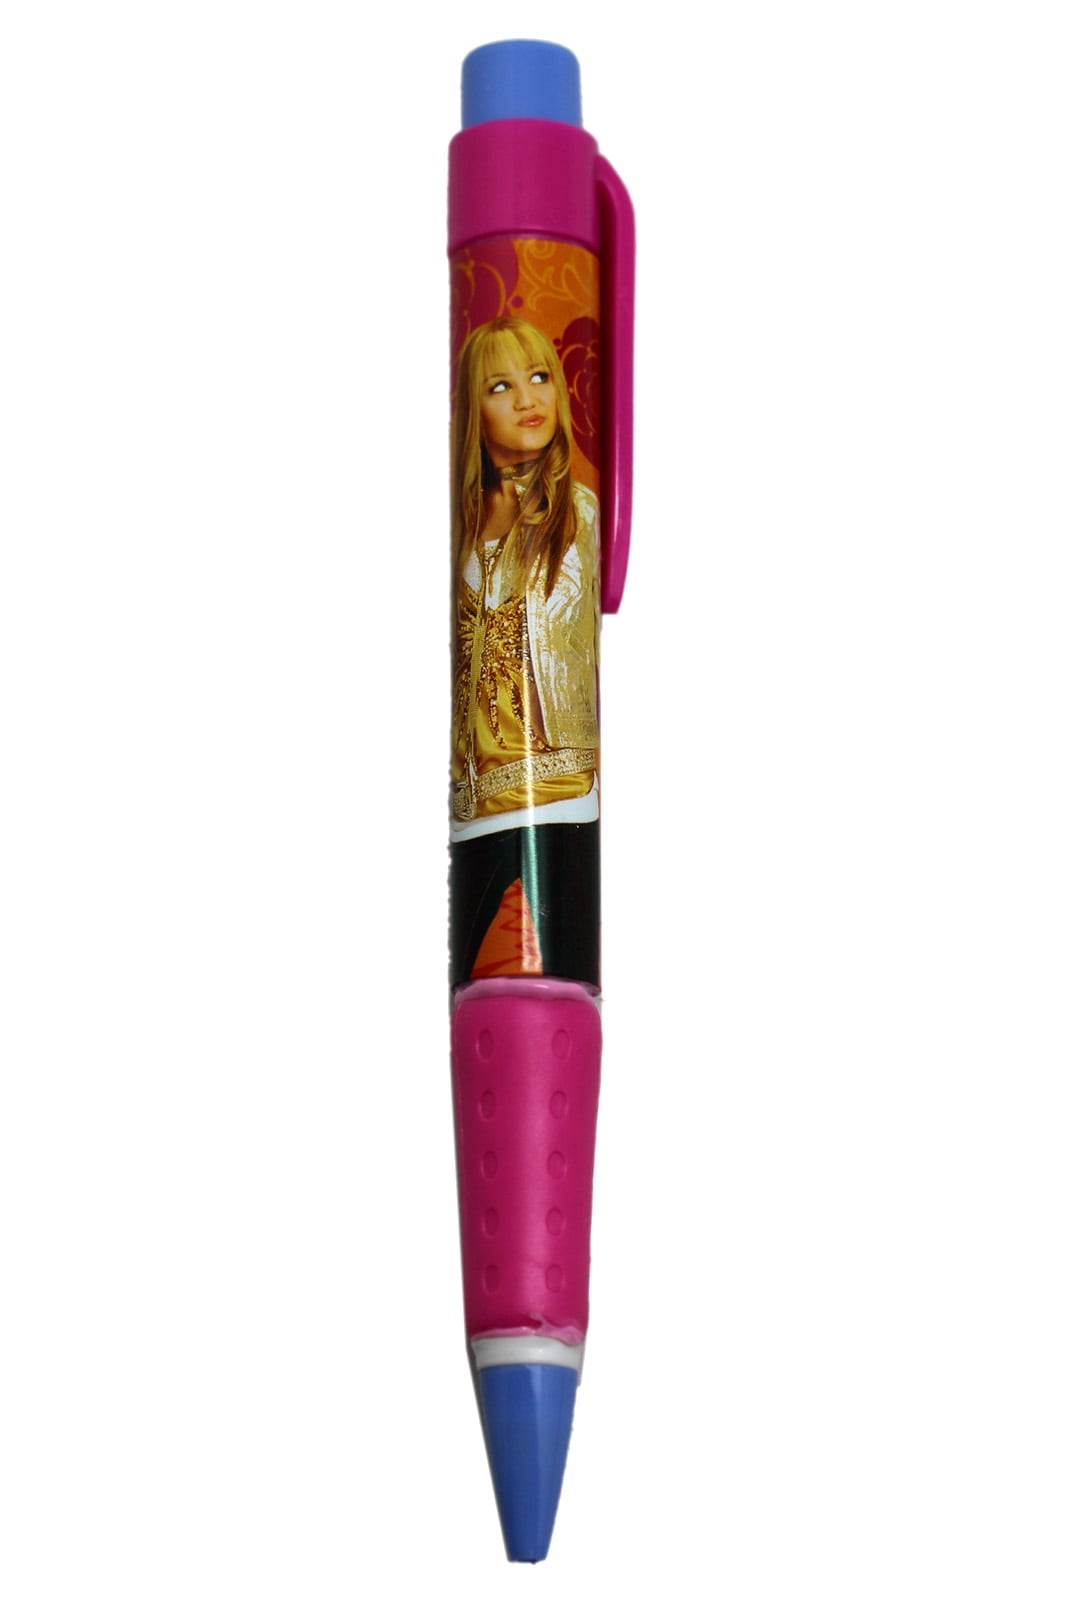 type 1 Disney Hannah Montana Office Supplies ballpoint pen 